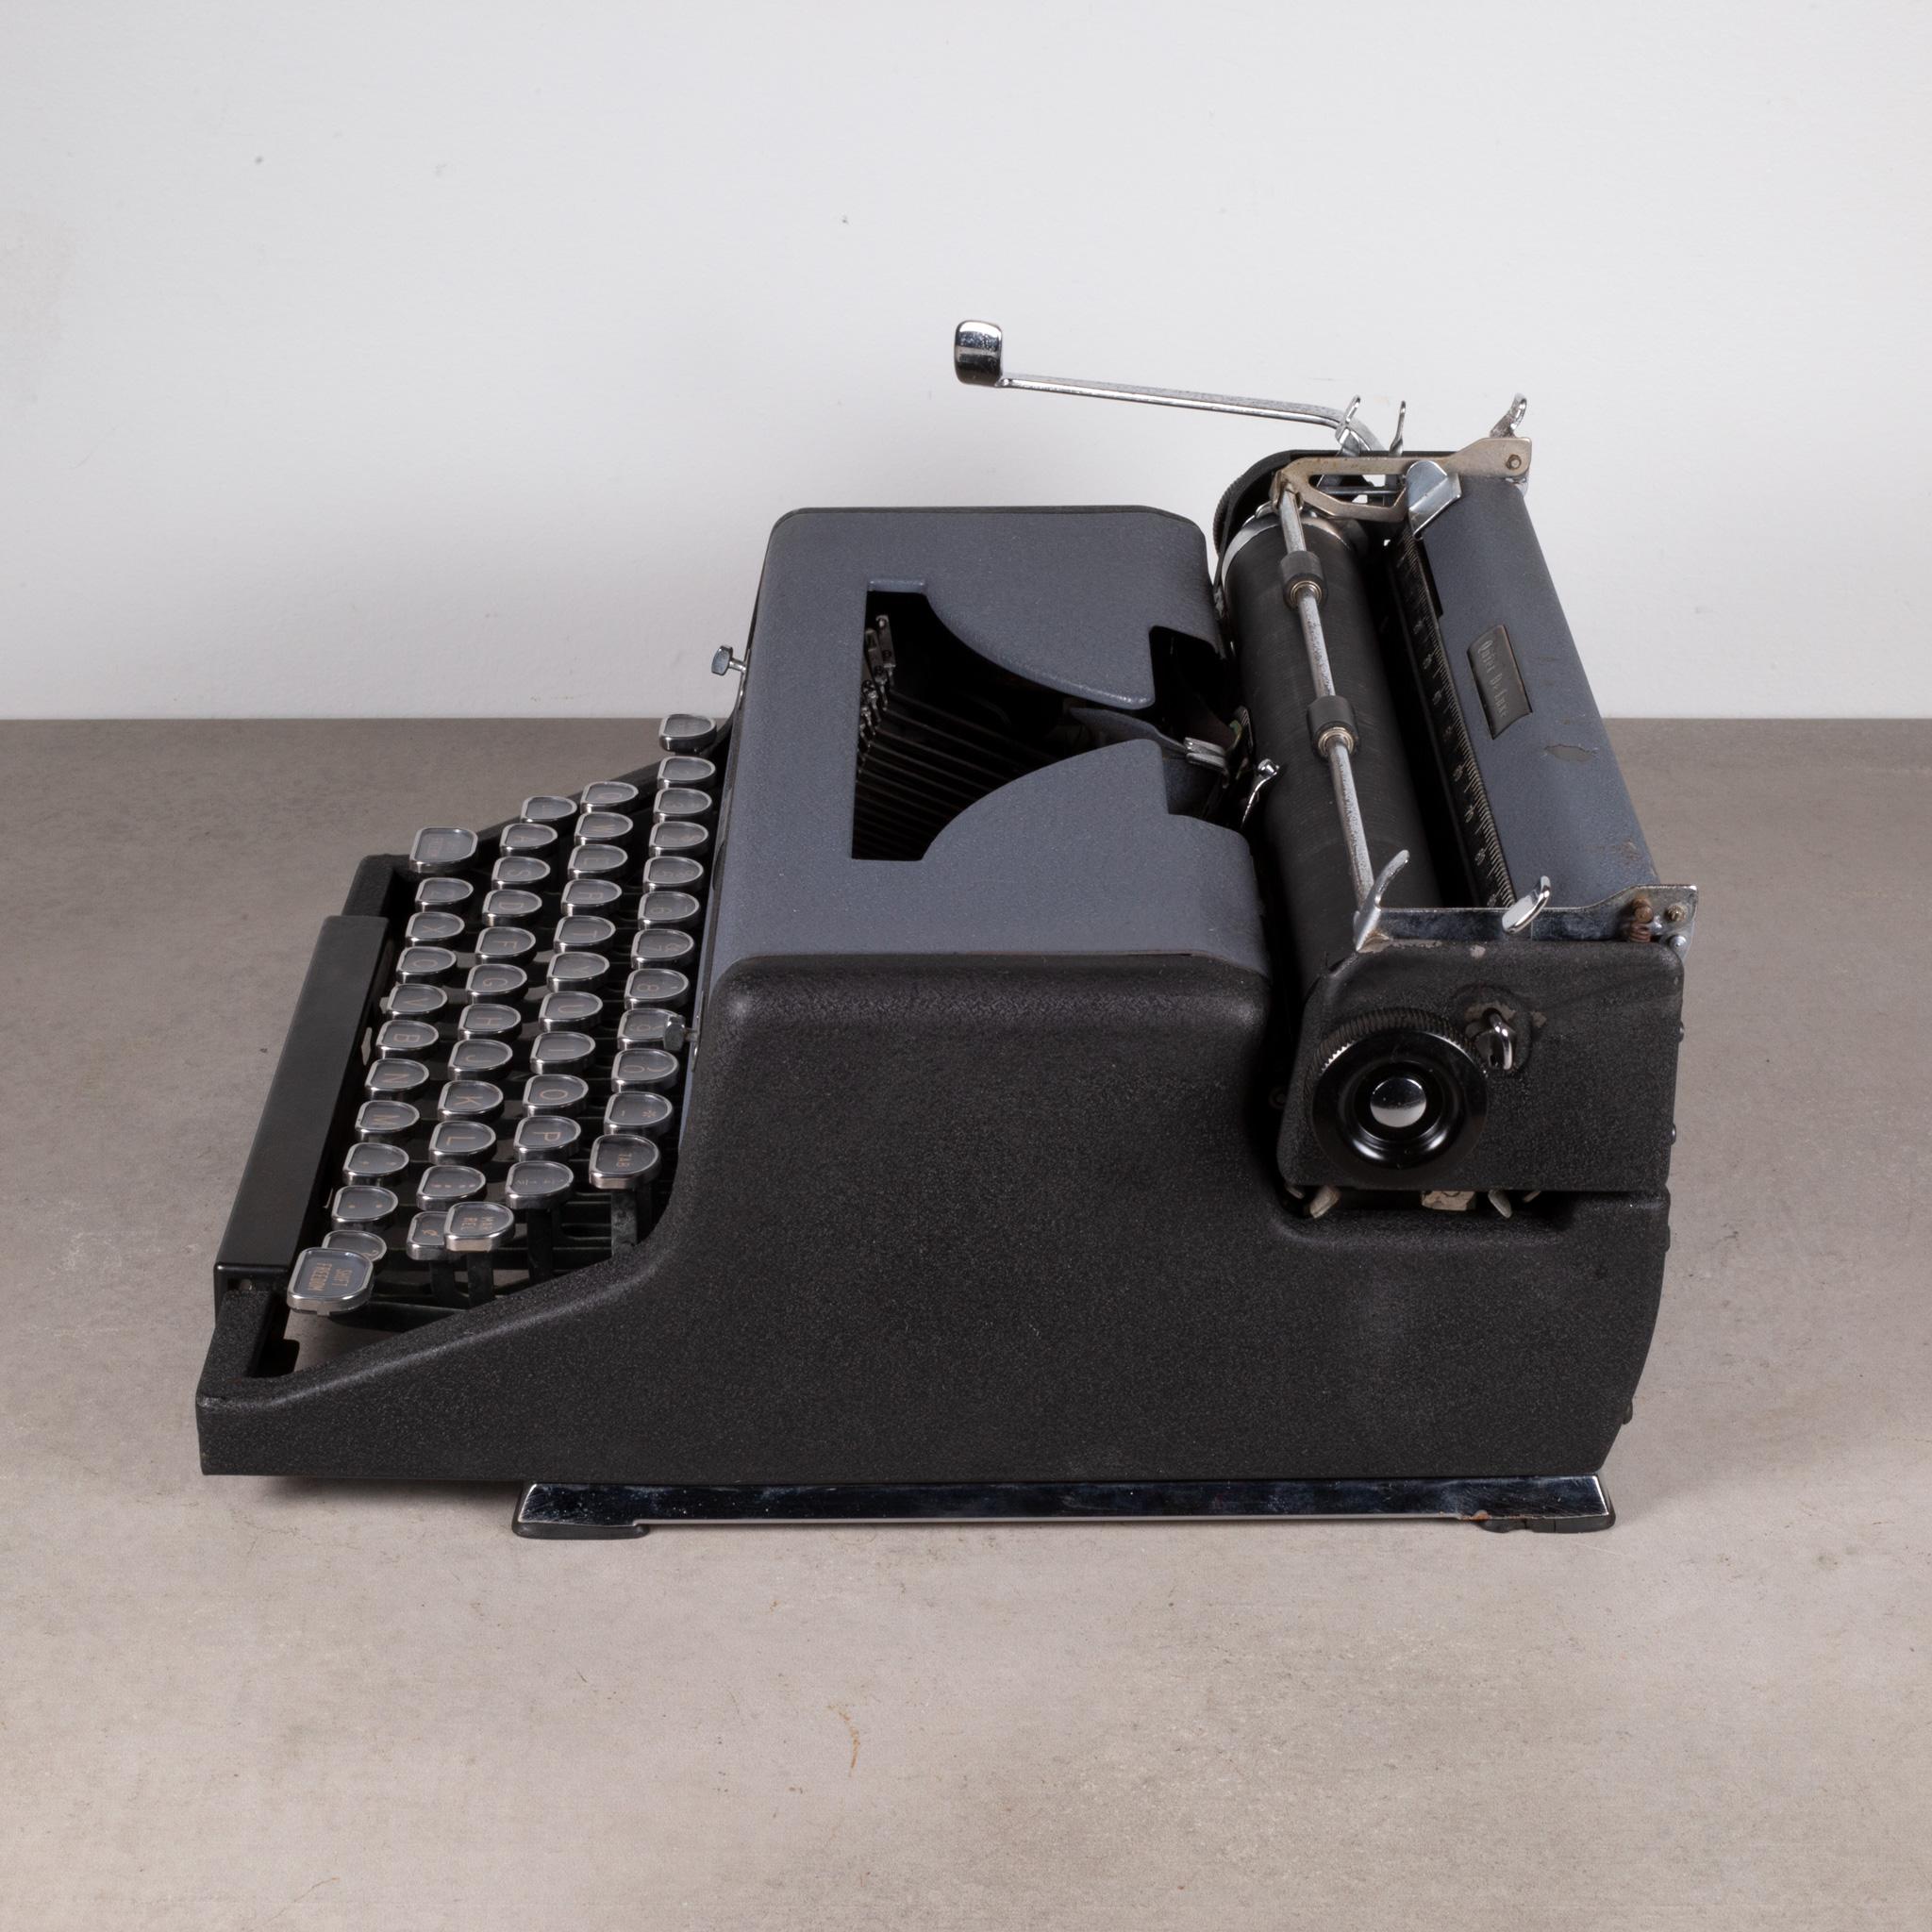 royal typewriter quiet deluxe